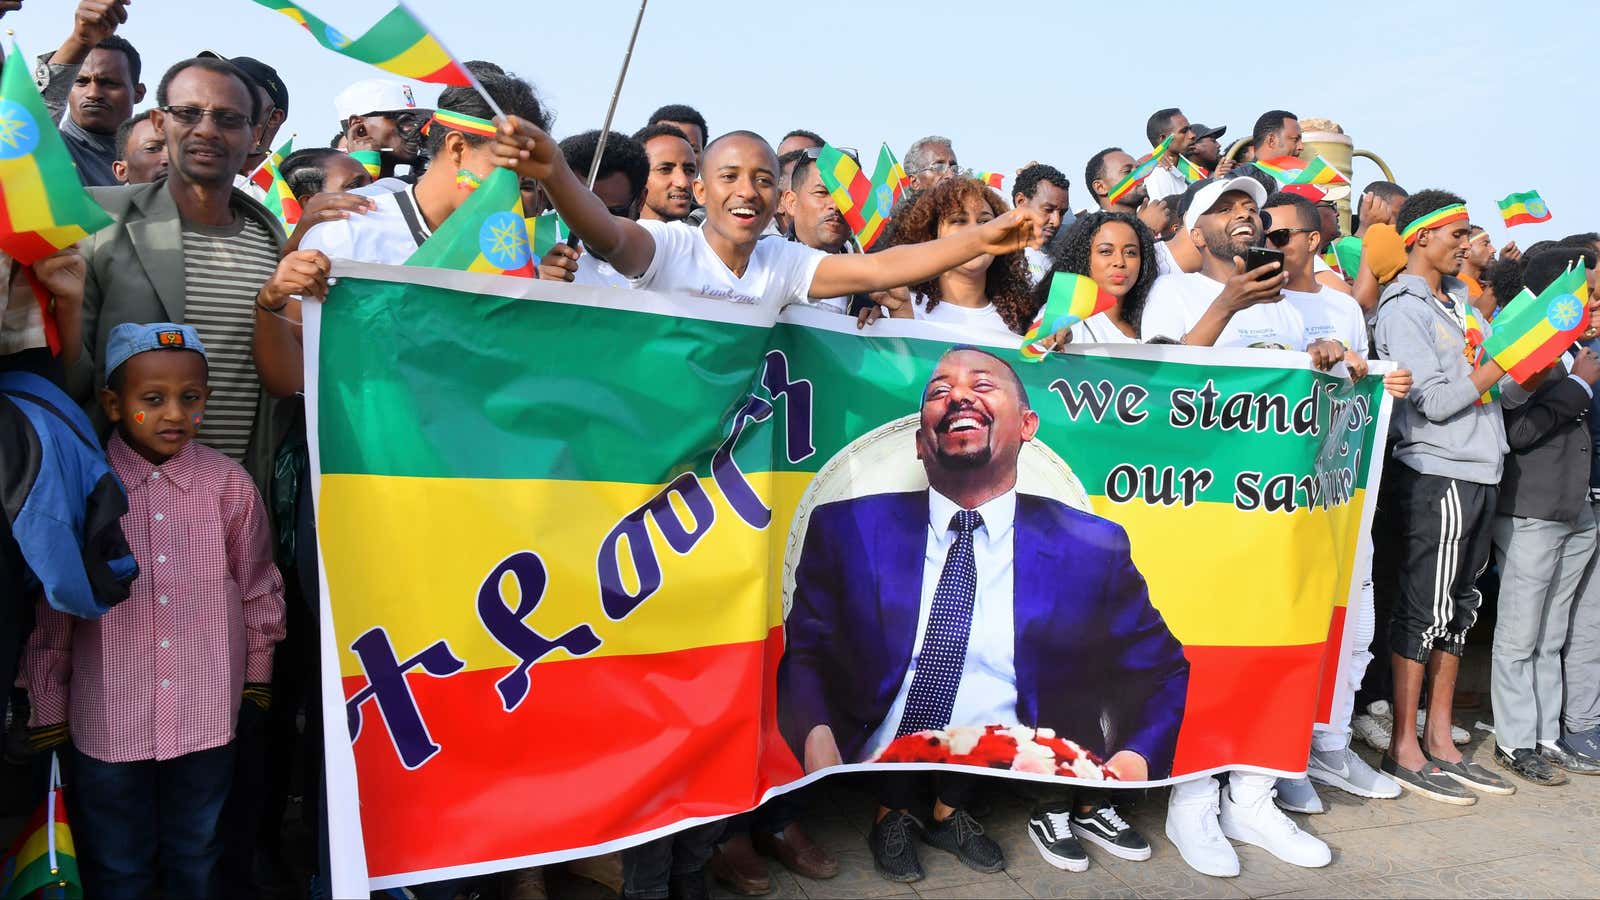 Ethiopia’s “savior”